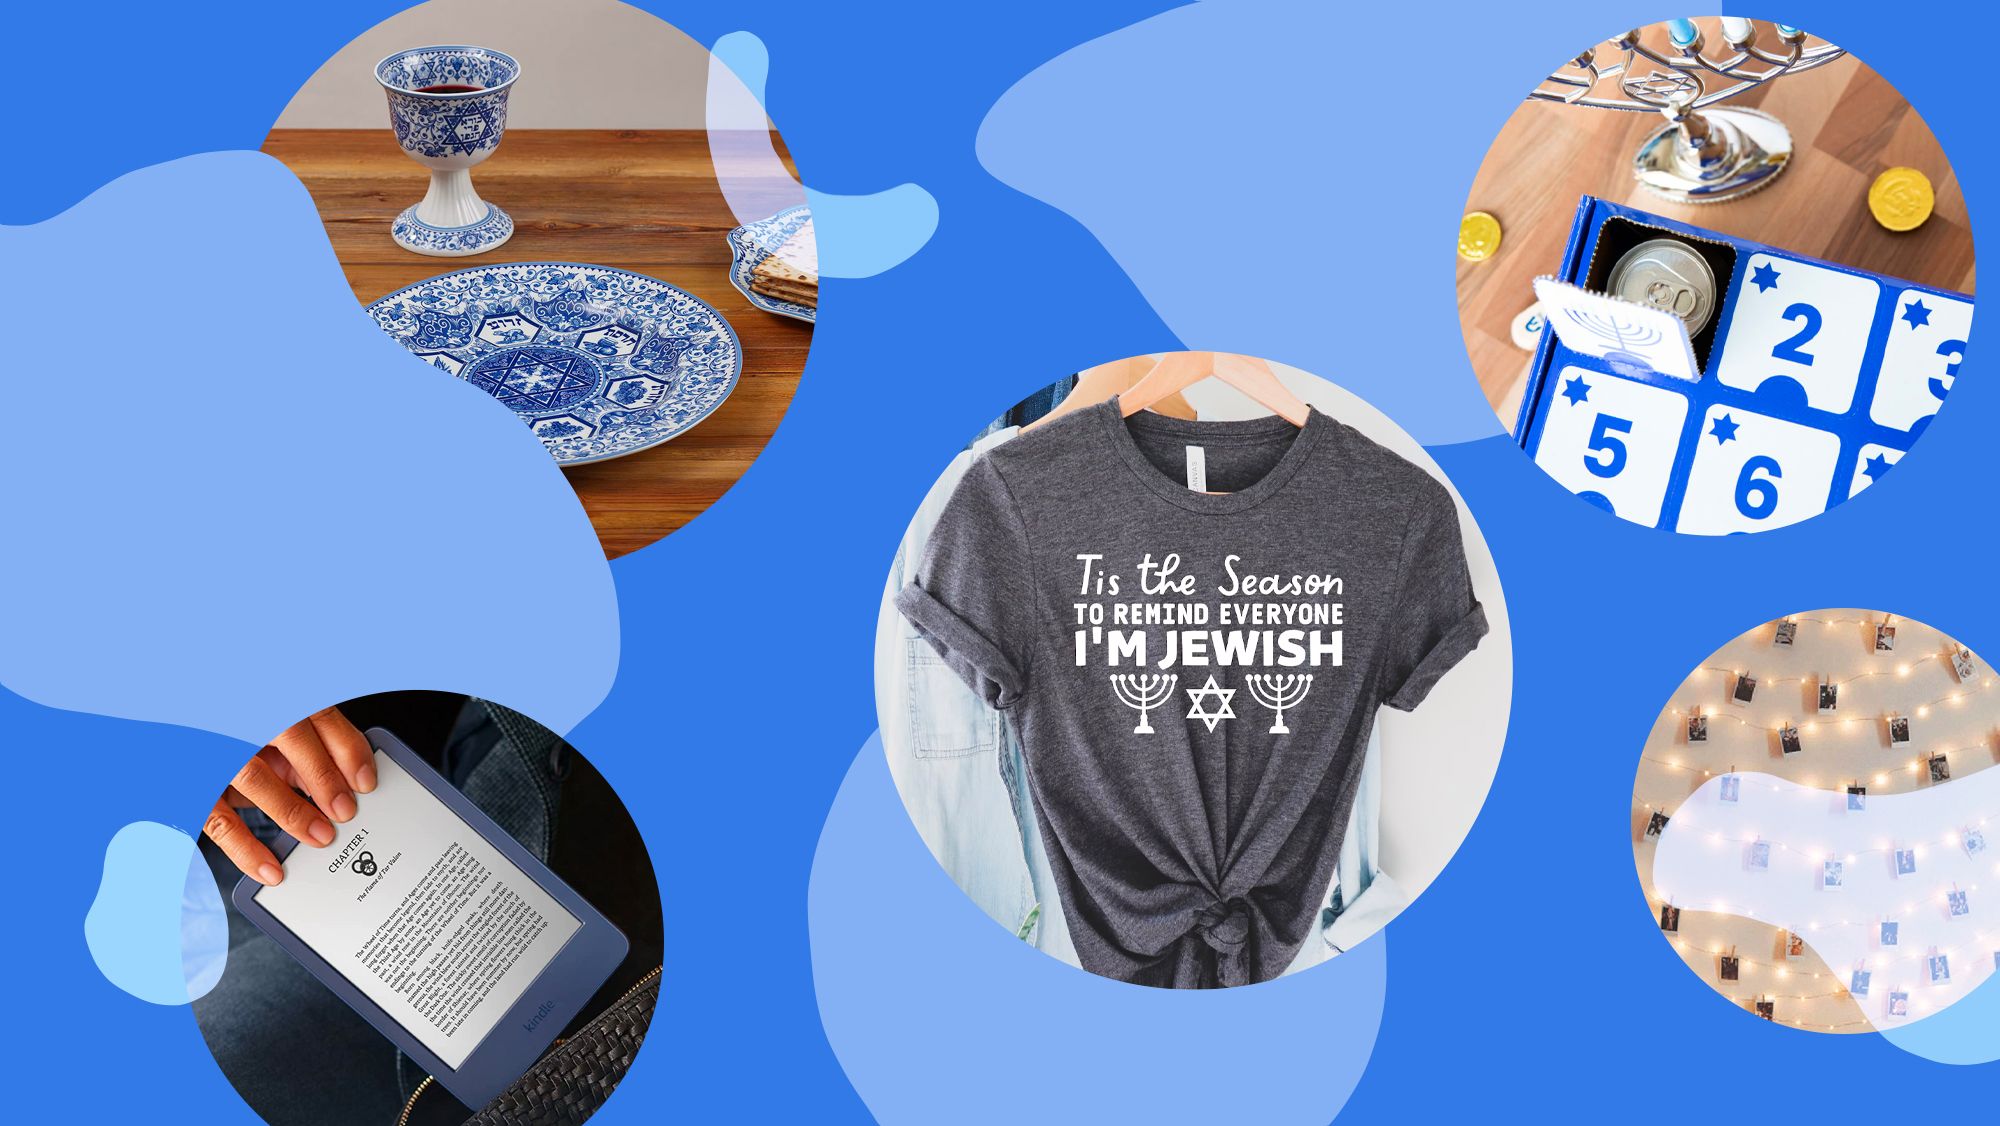 best hanukkah gifts including shirts, kindles, beer advent calendars, string lights, and 
spode judaica menorahs